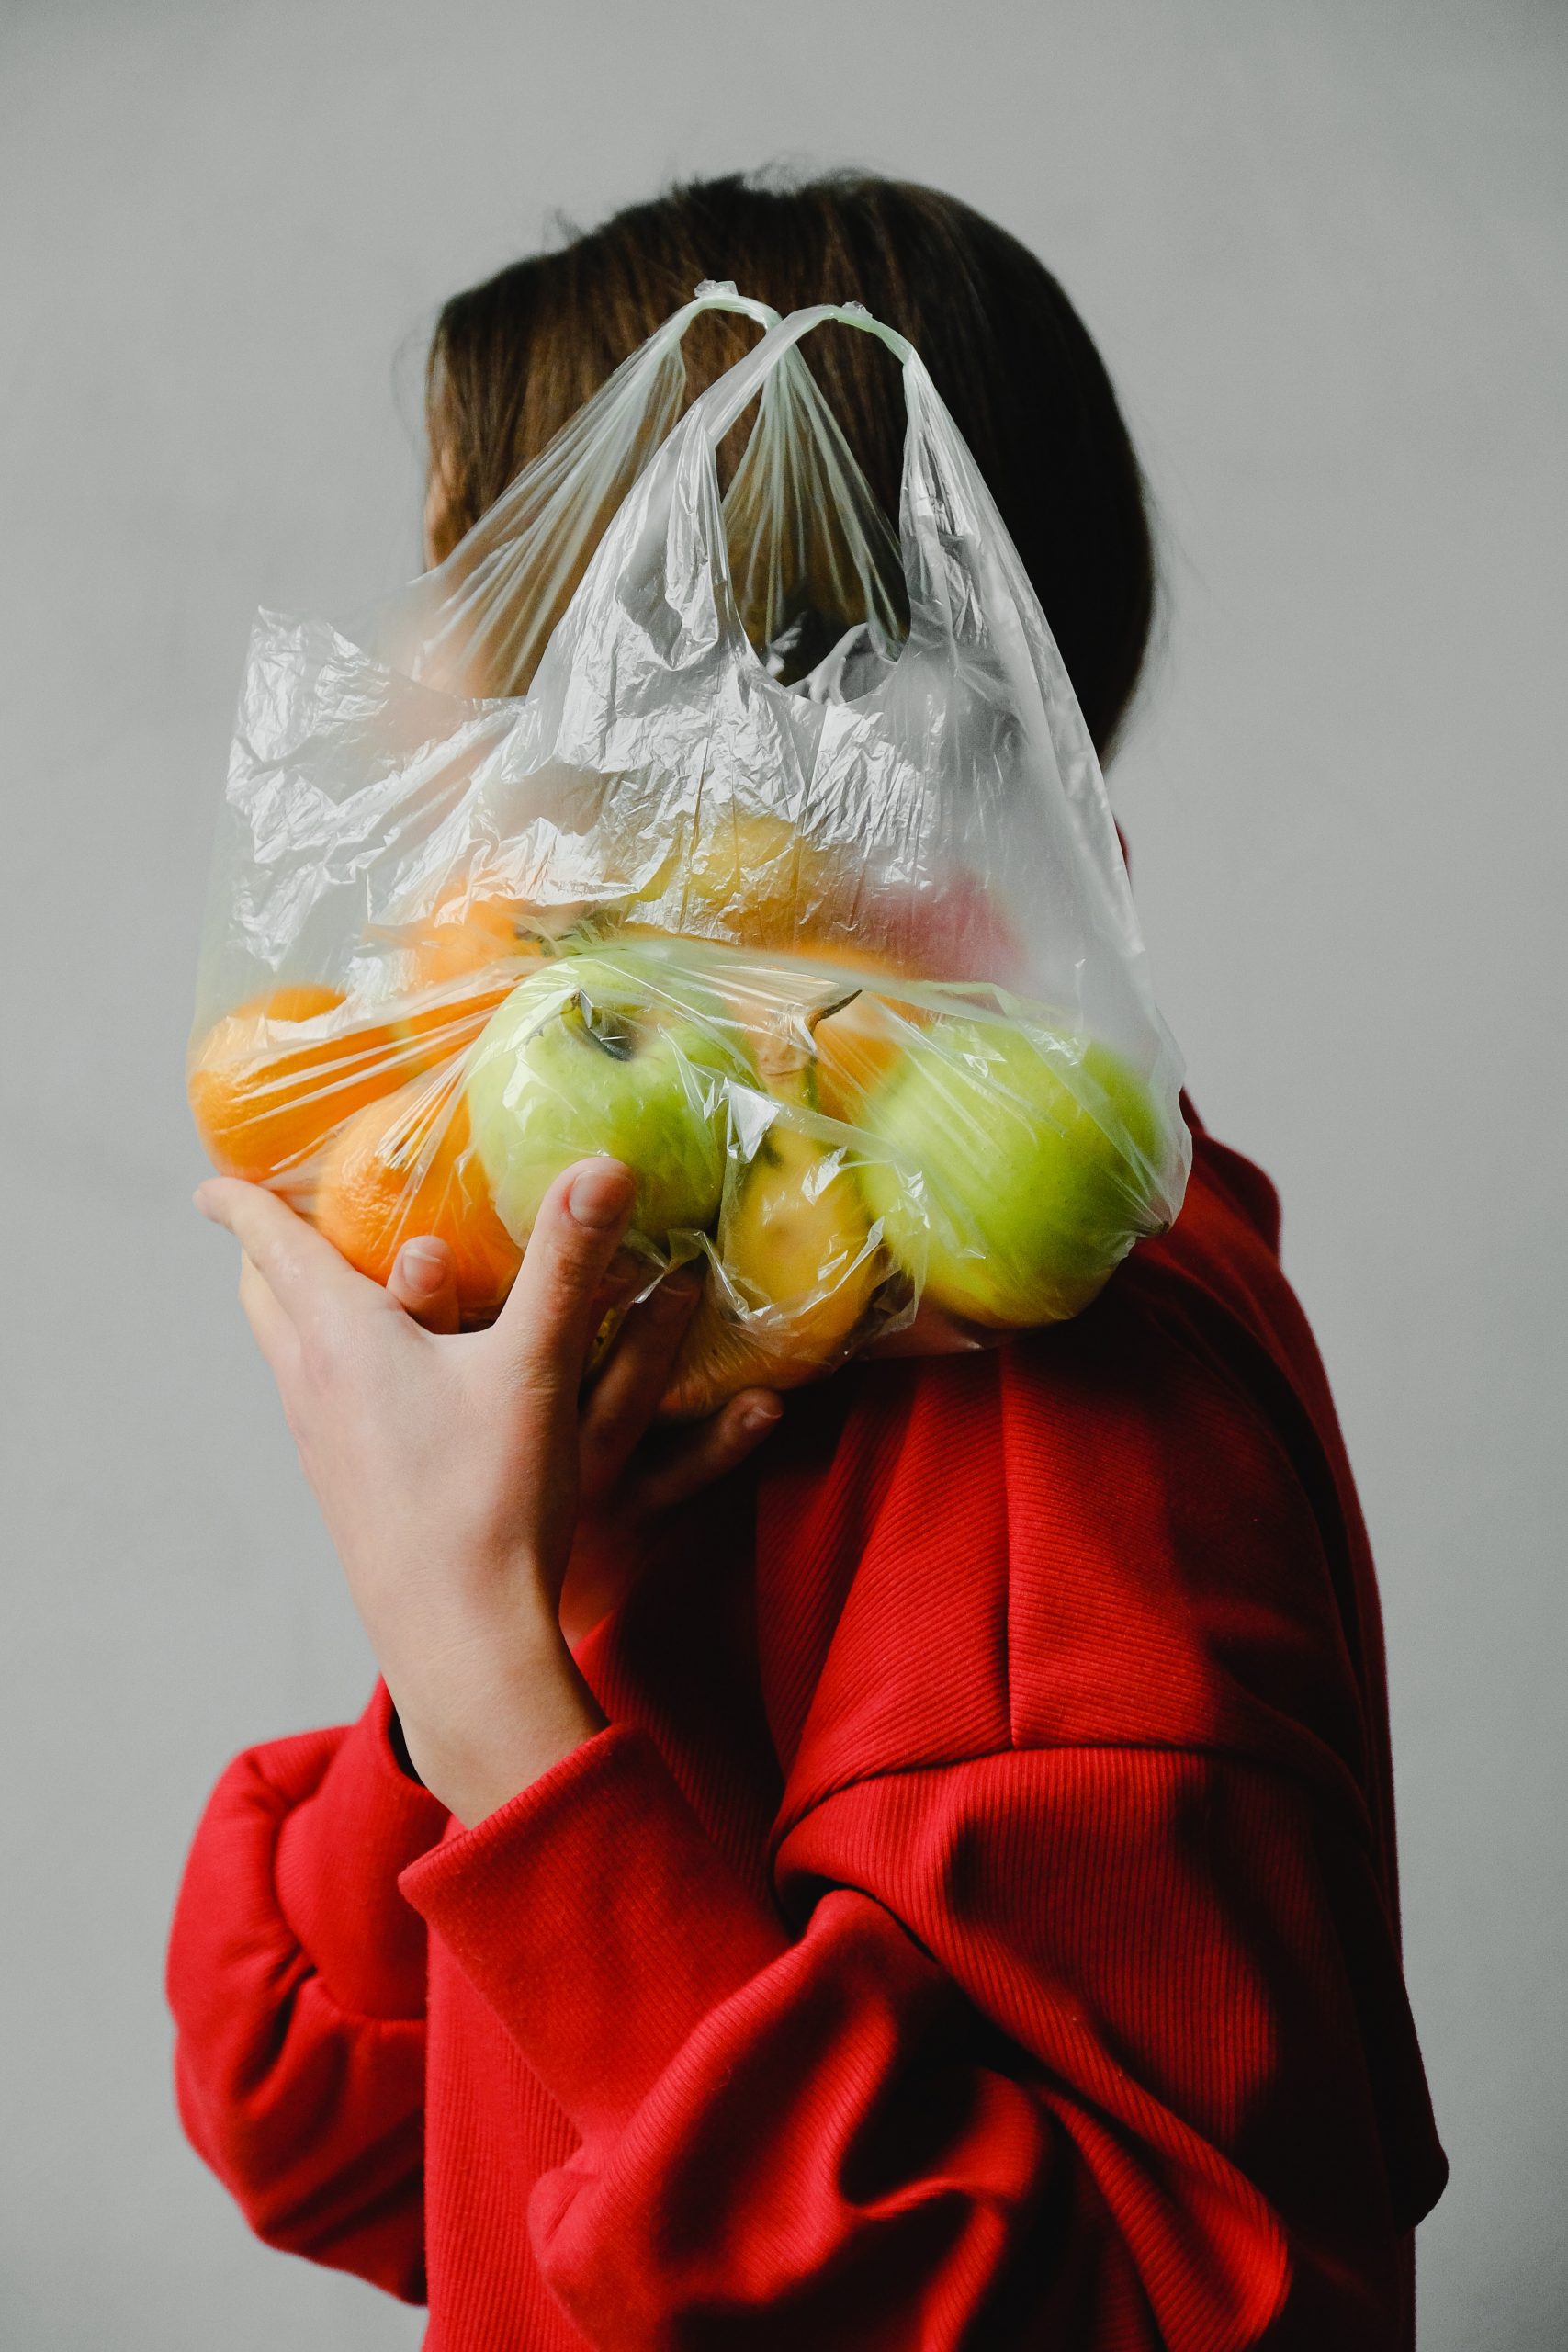 Versteckter Hunger trotz Obst- und Gemüseüberschuss